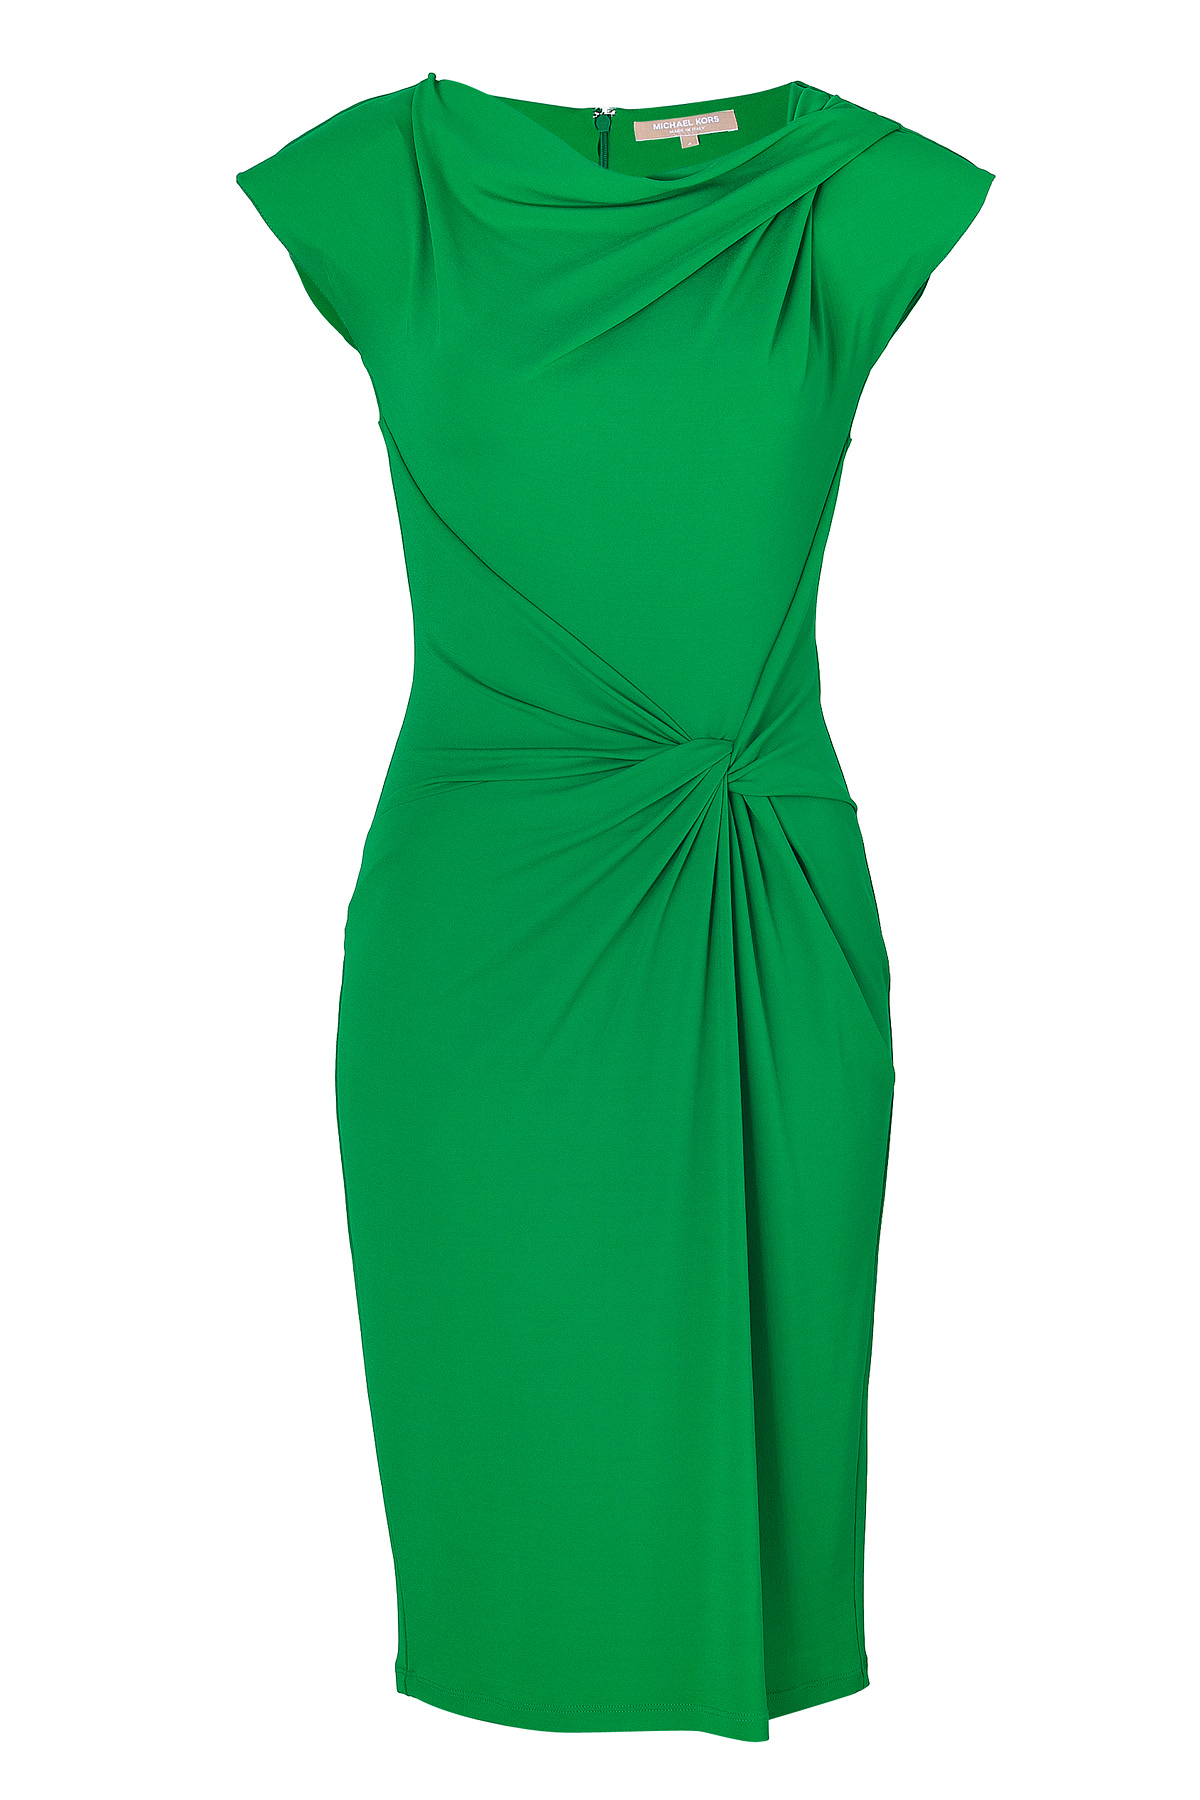 Michael Kors Palm Green Draped Jersey Dress in Green | Lyst